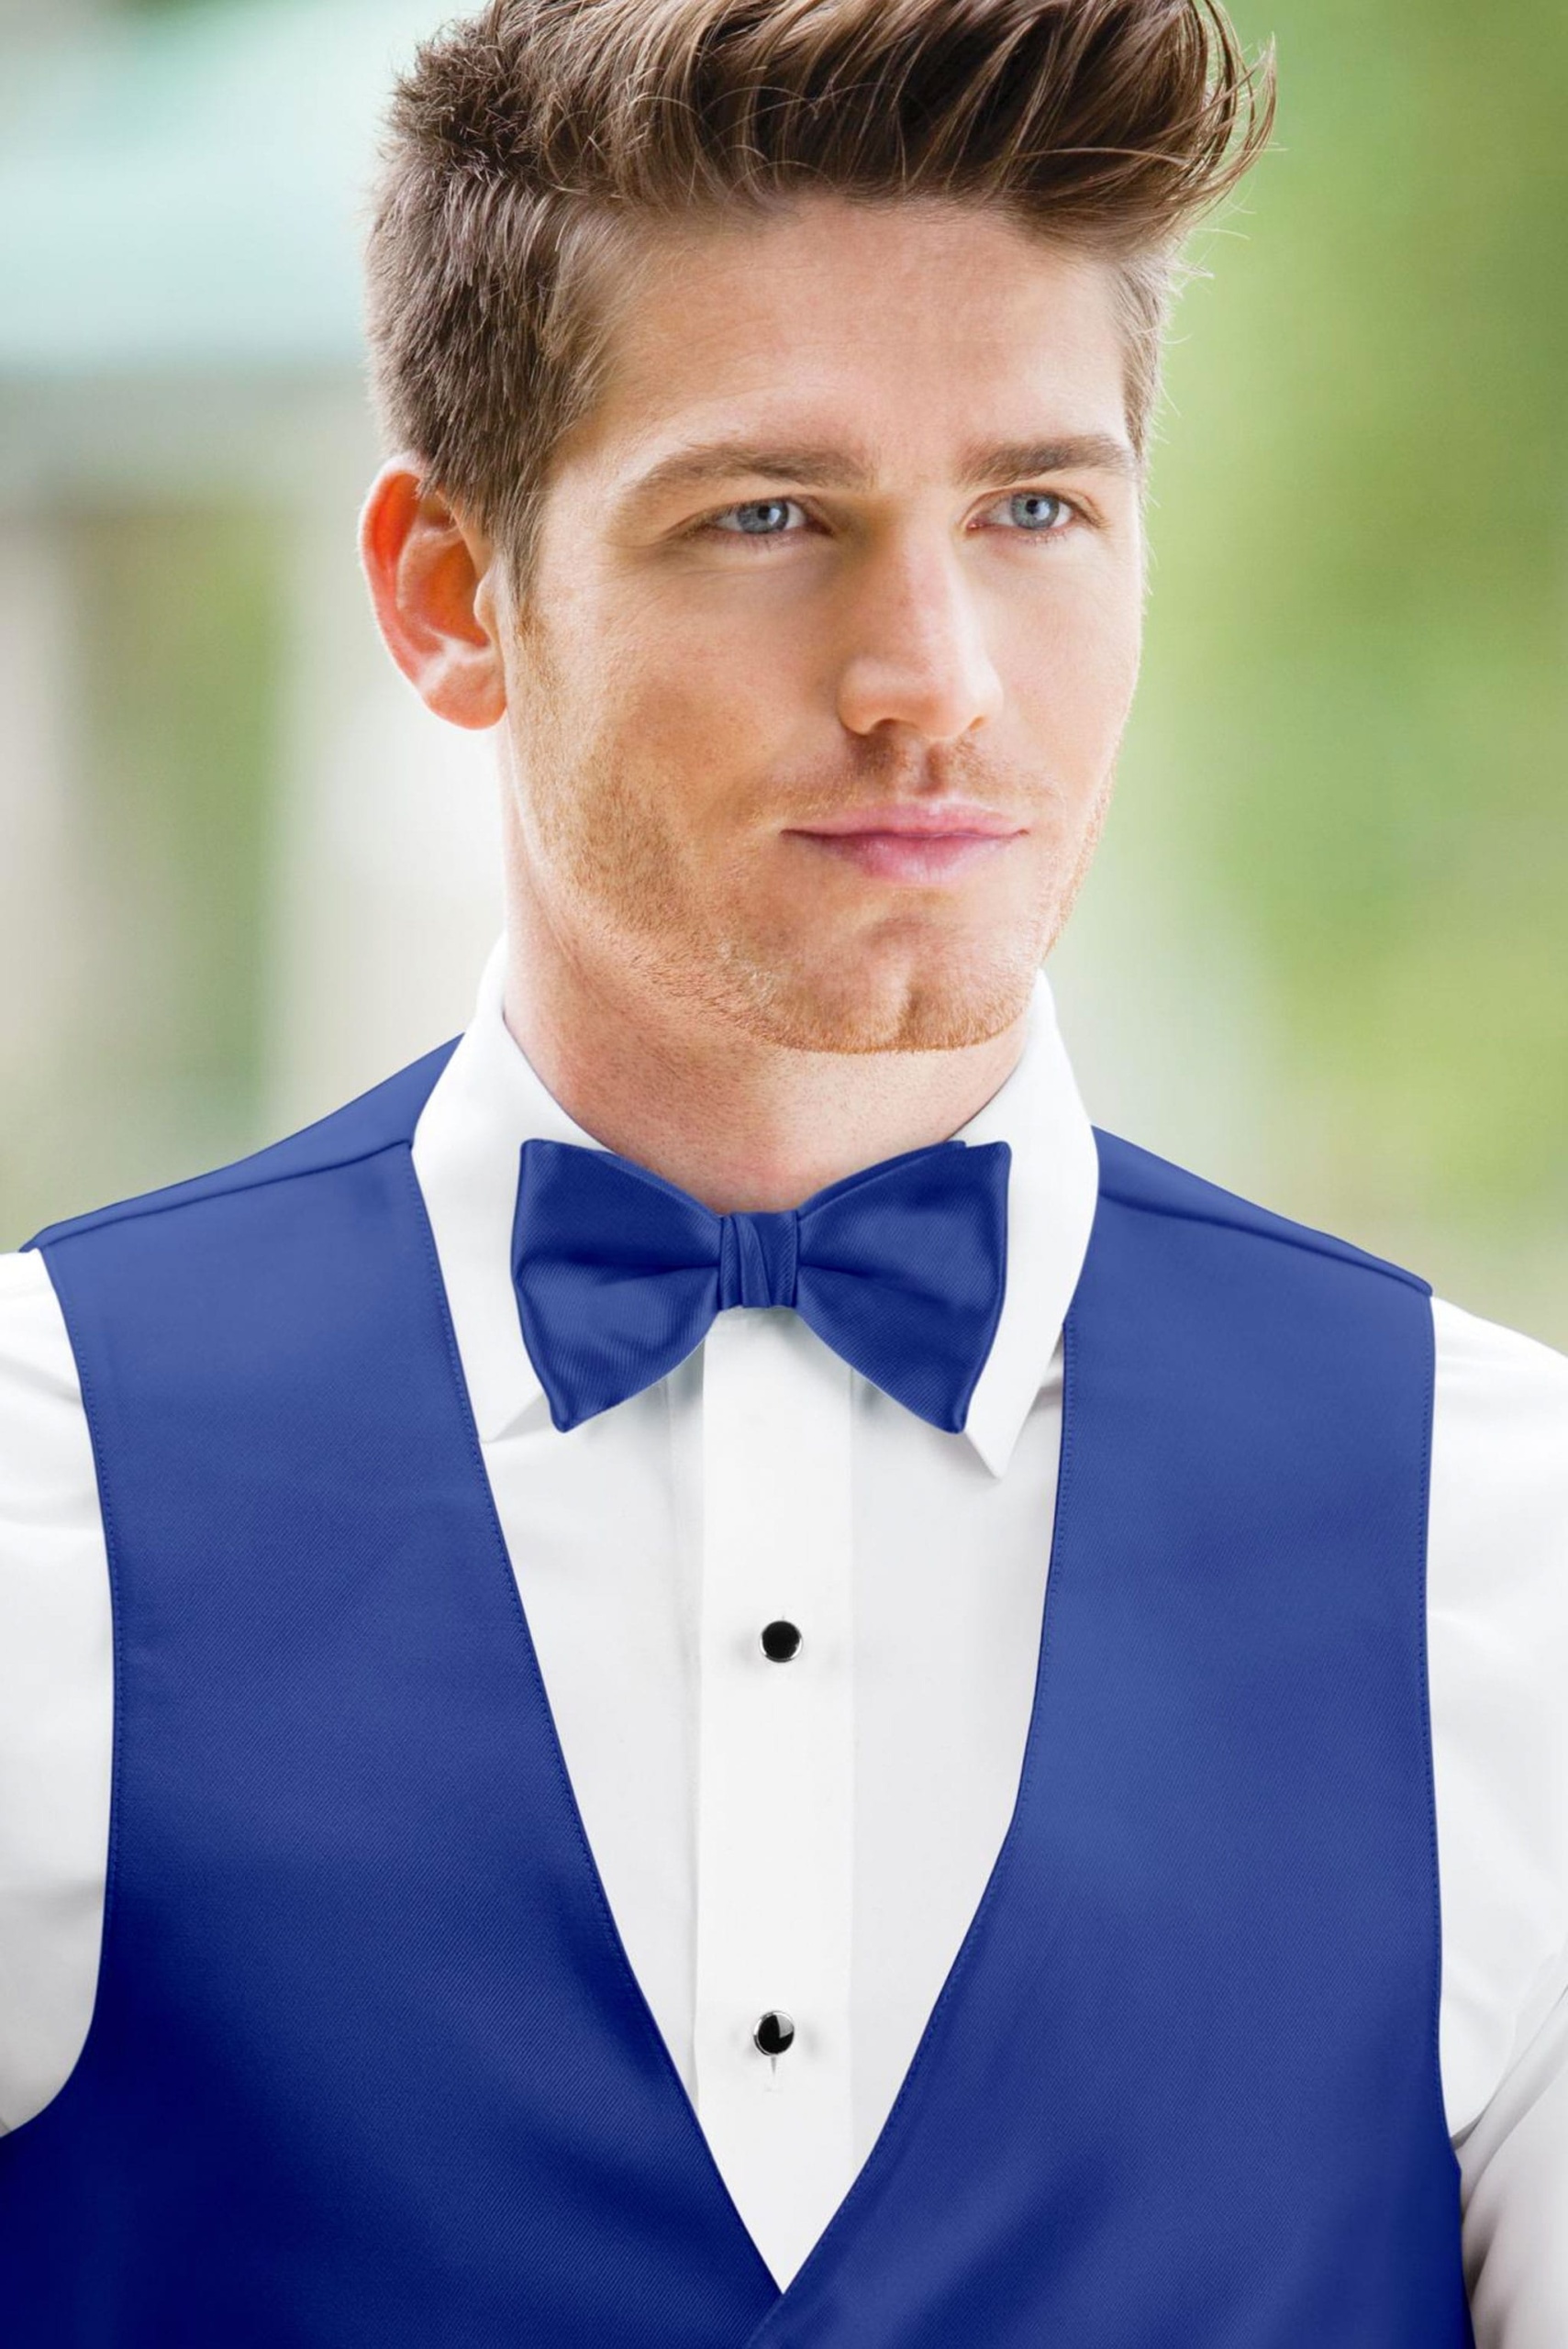 Solid Royal Blue Bow Tie - Black Tie Formalwear